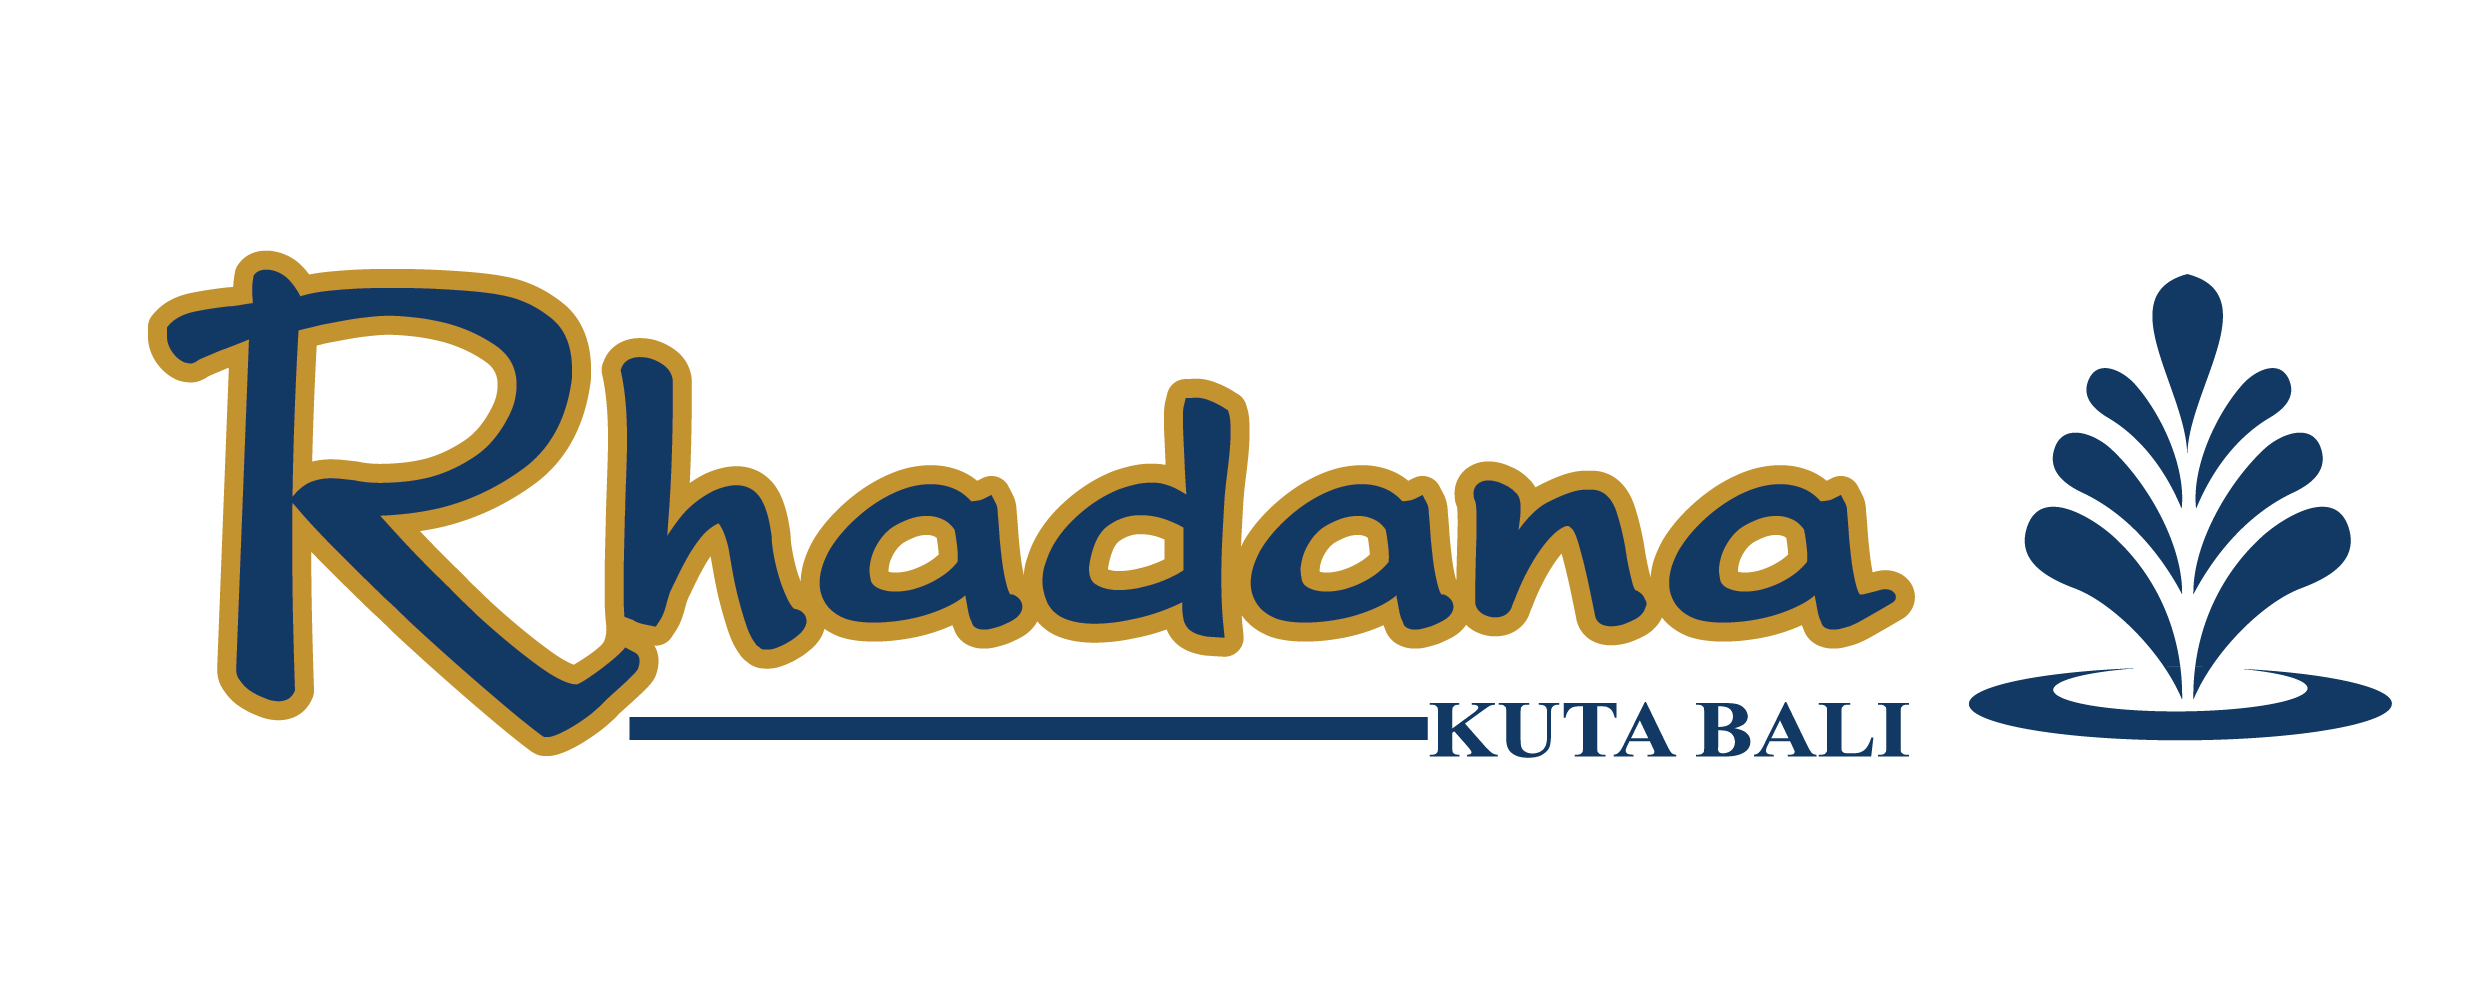 Rhadana Kuta Bali